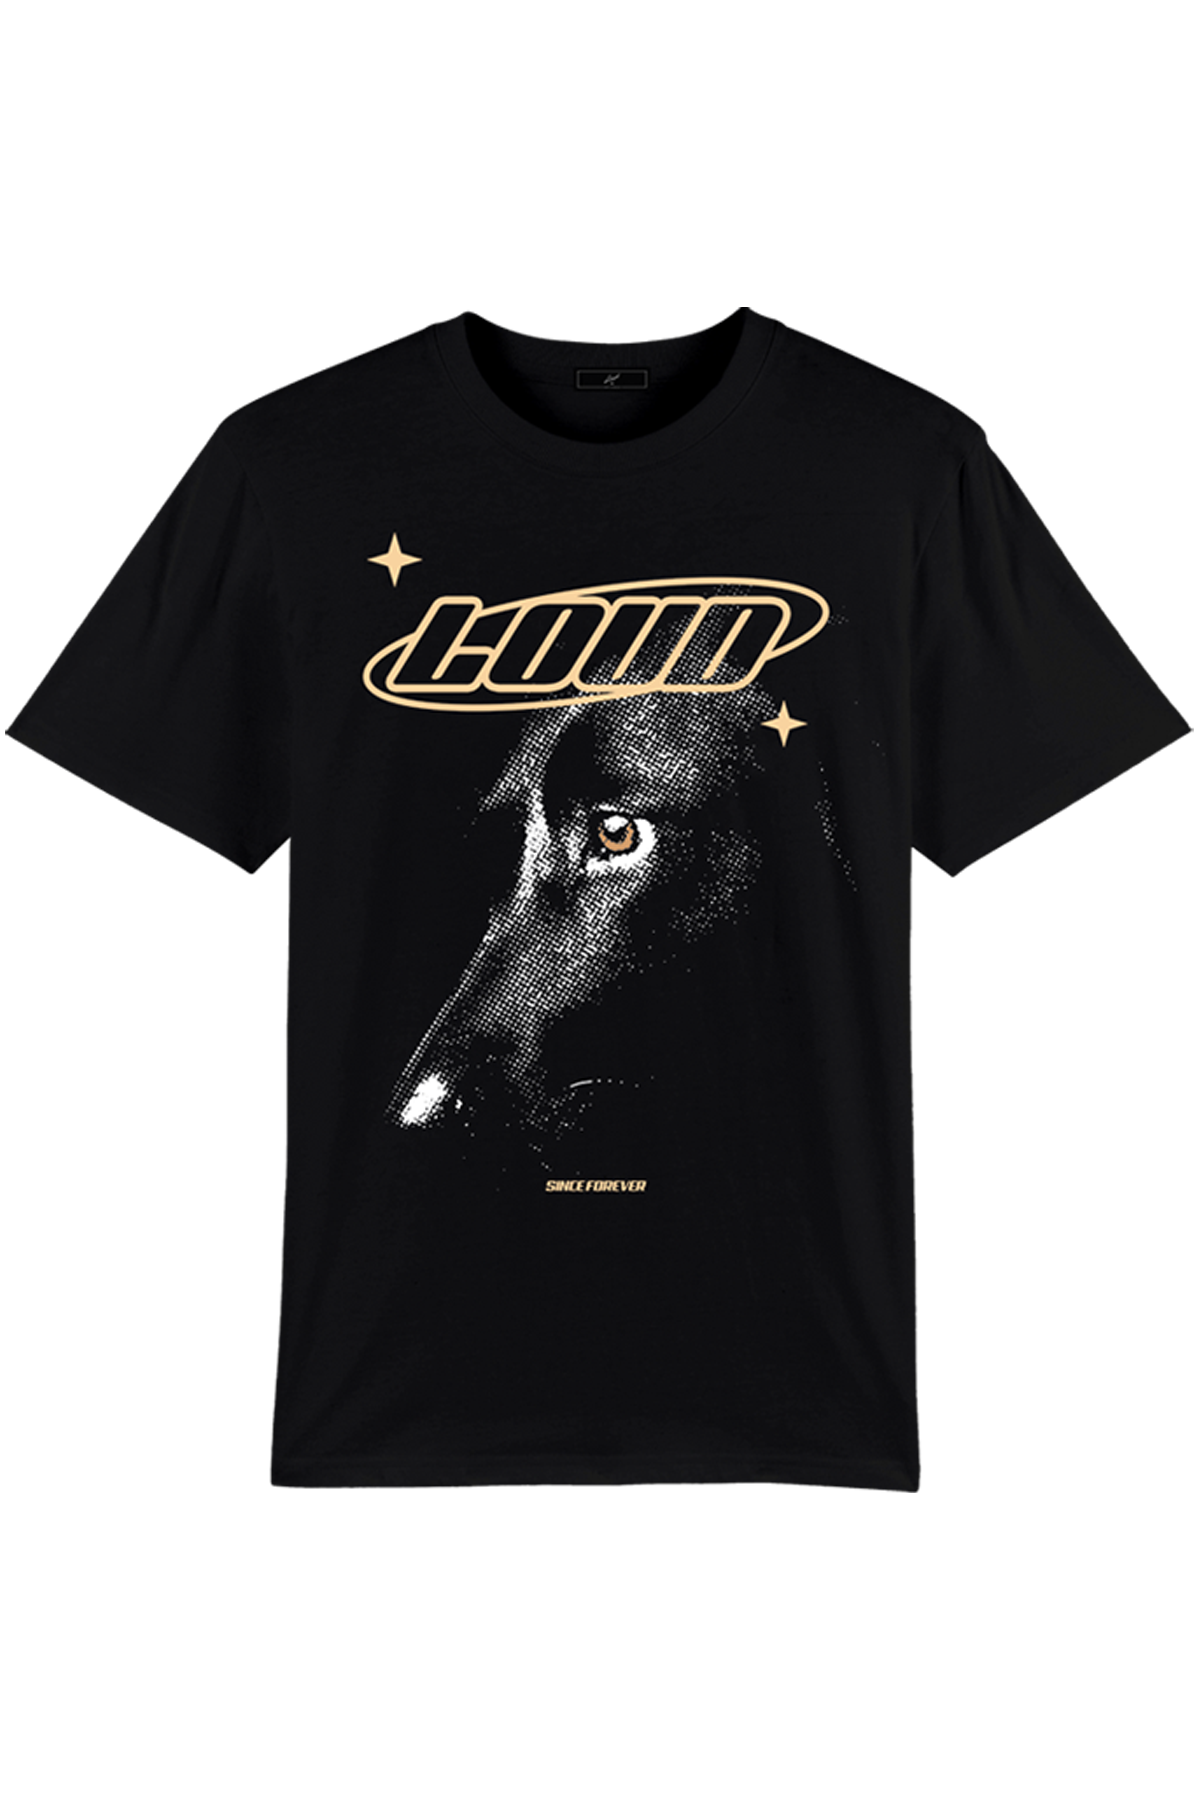 Loud Circle Logo with Doberman - Black T-Shirt - Live Look Loud